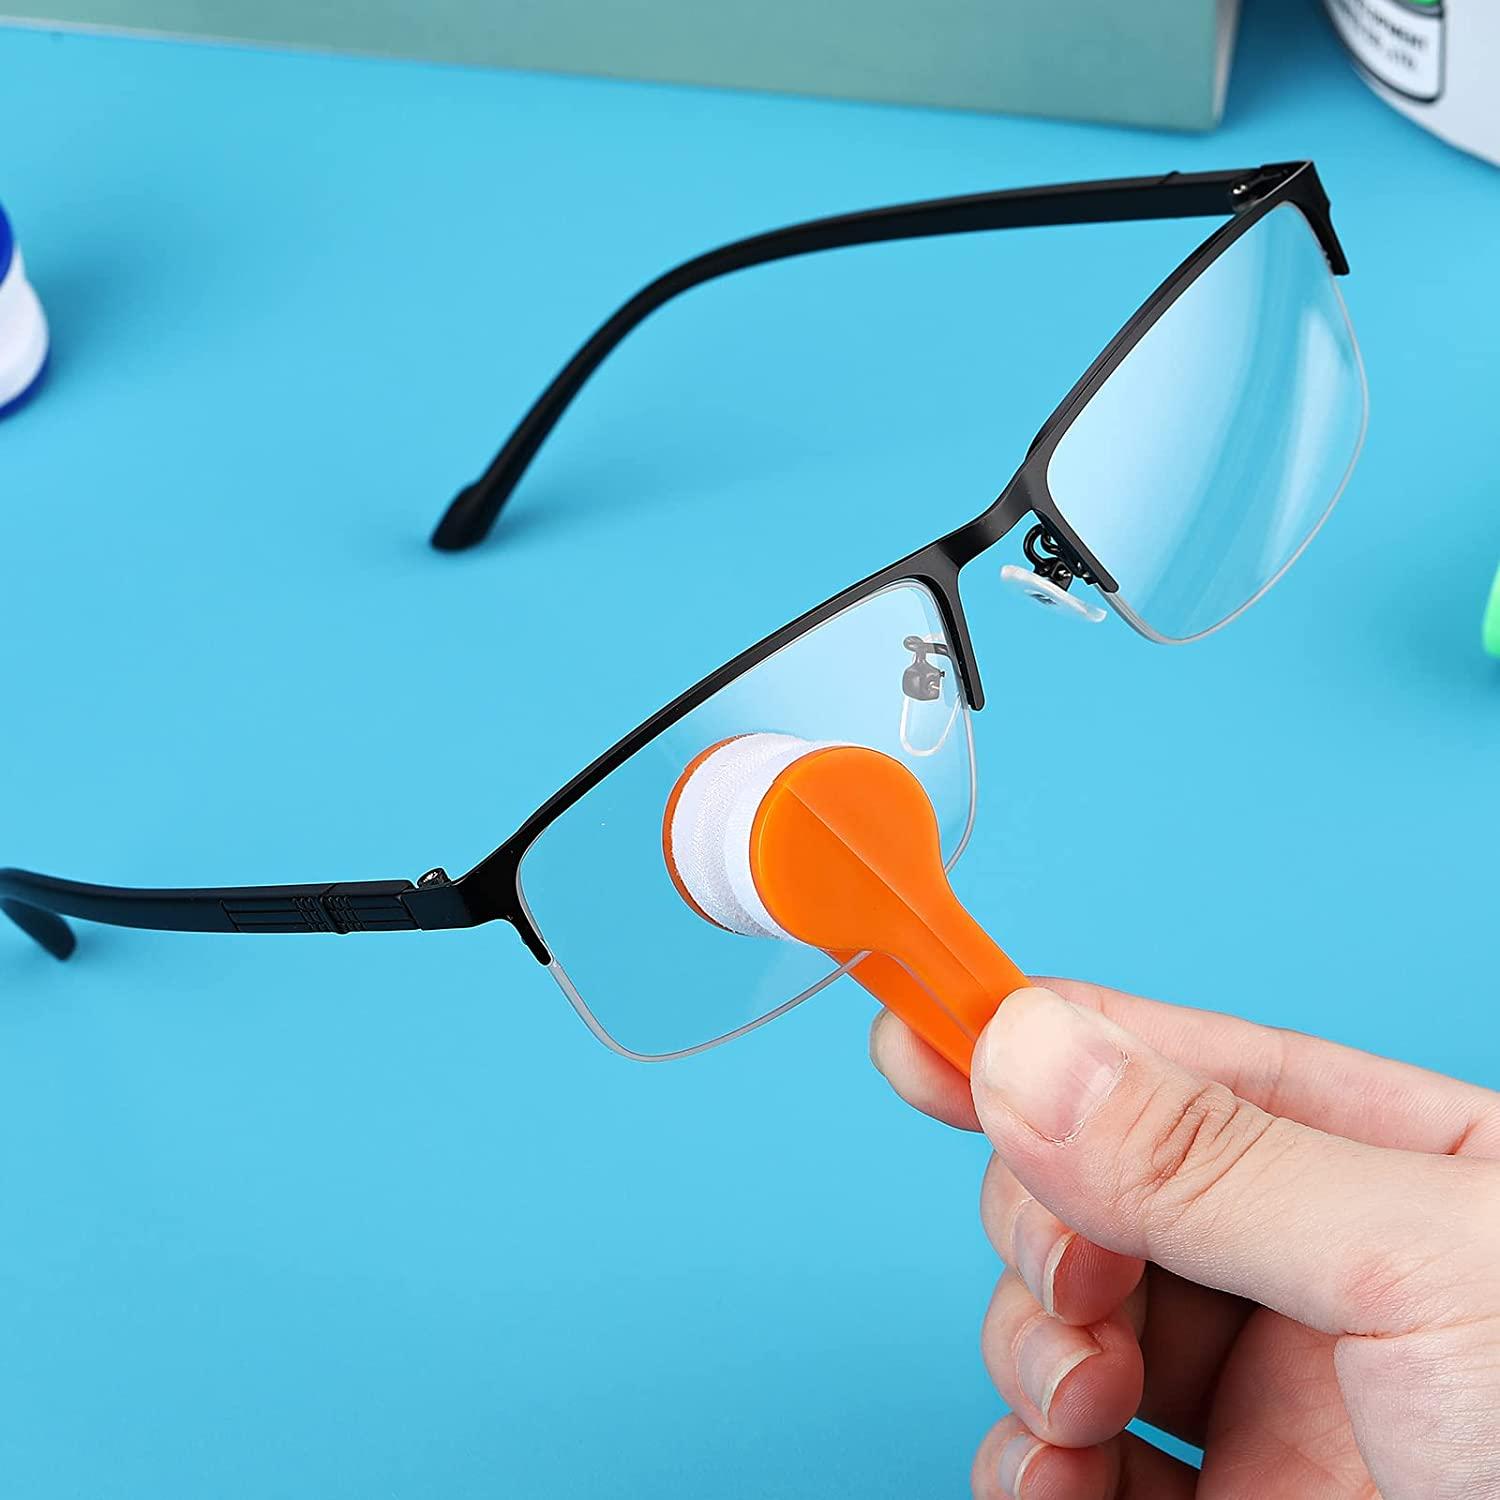 5 PKS-Mini Sun Glasses Eyeglass Microfiber Spectacles Cleaner Soft Brush  Cleaning Chips Mini, 5 units - Harris Teeter